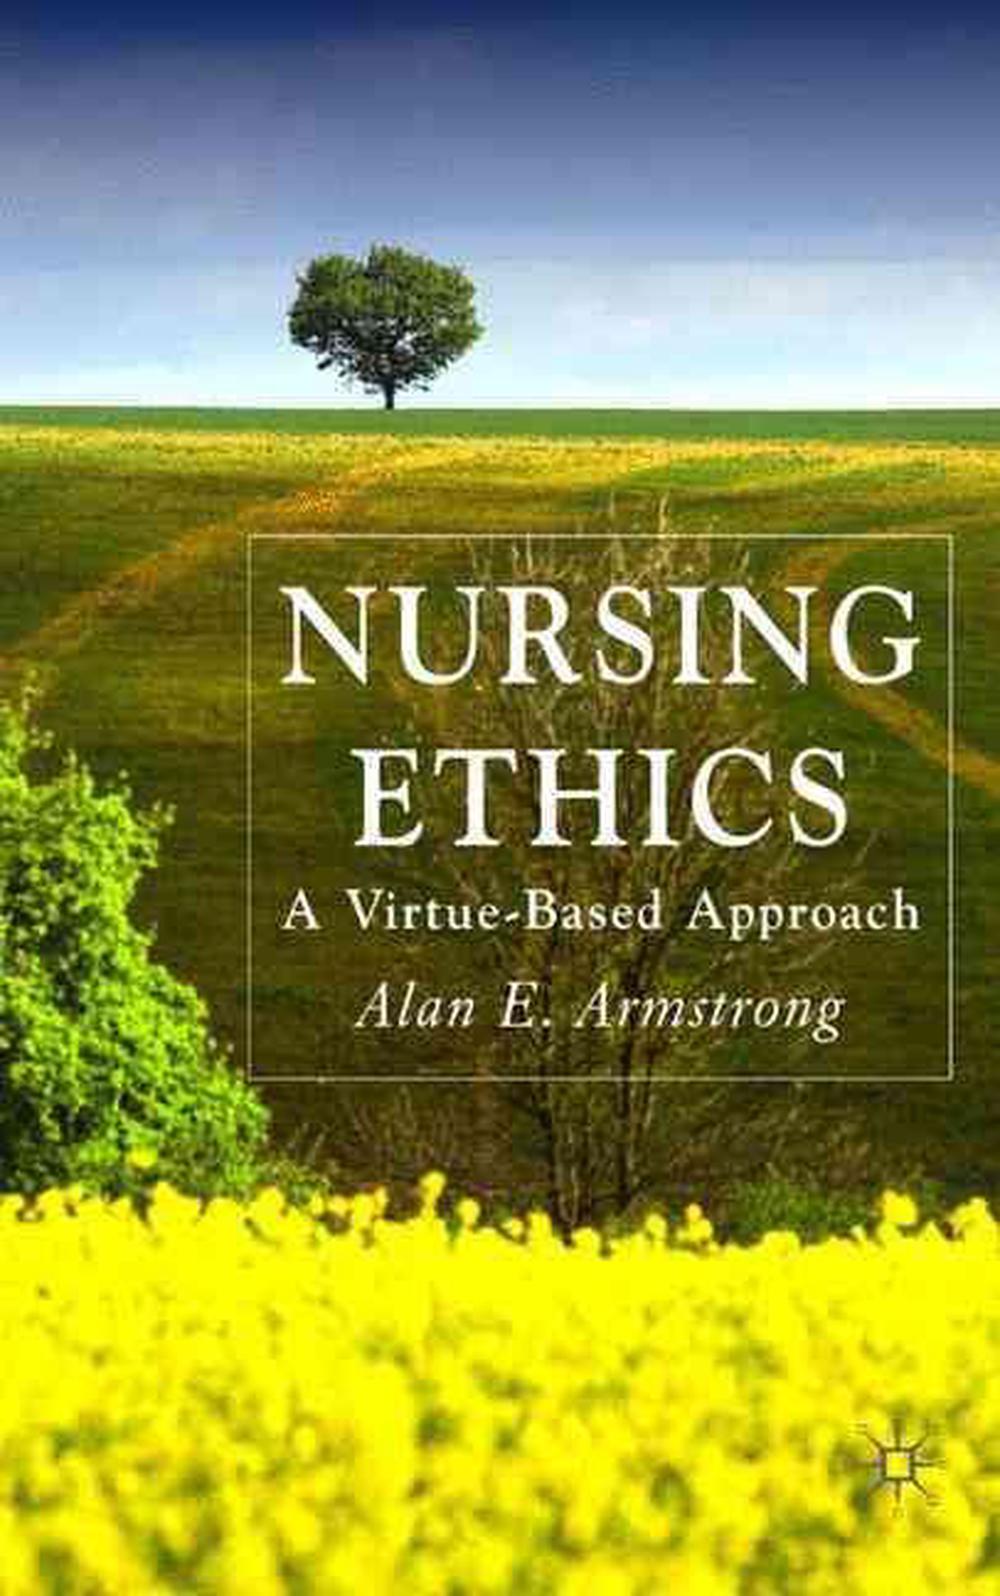 virtue ethics in nursing essay